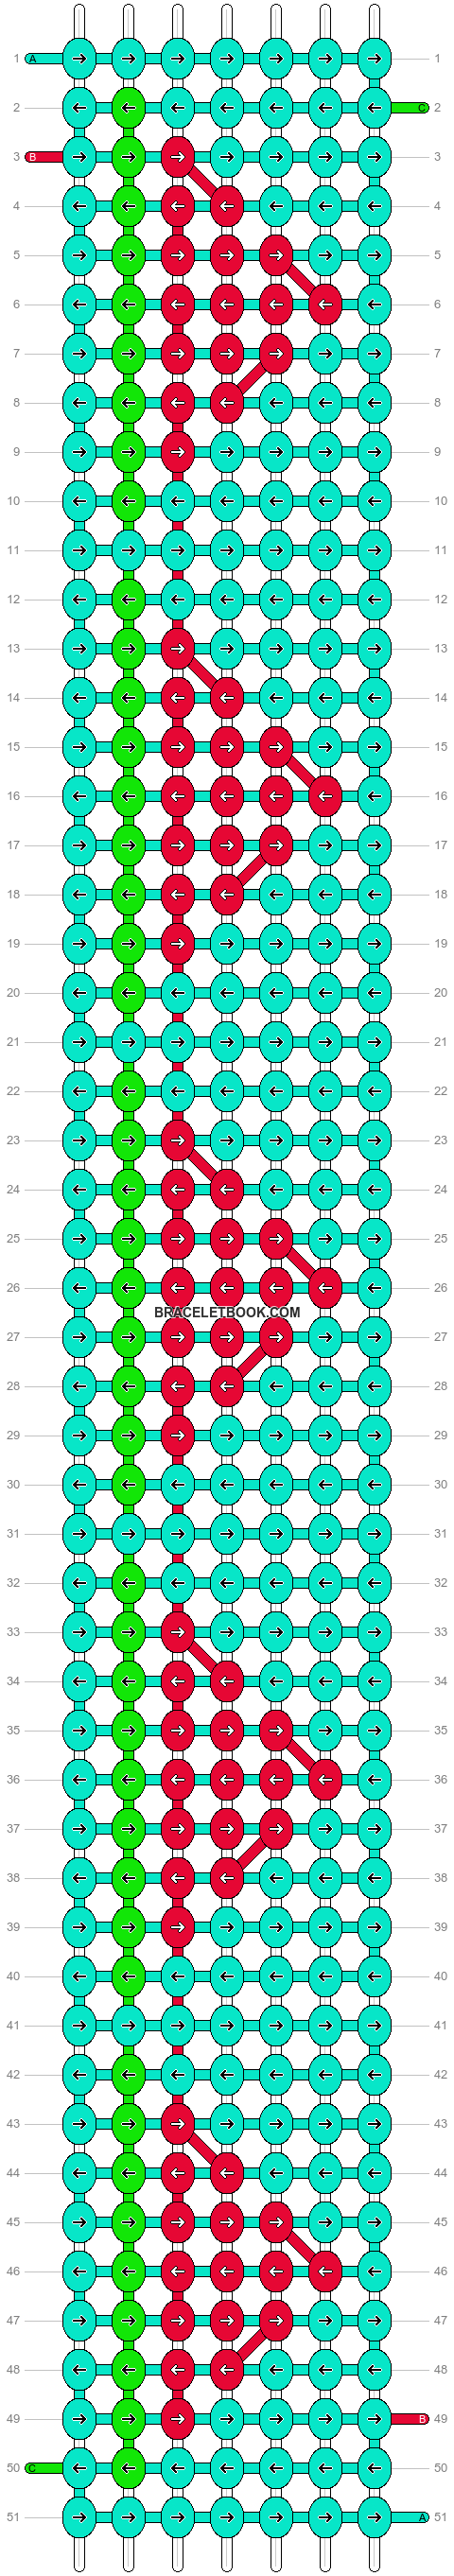 Alpha pattern #73198 pattern